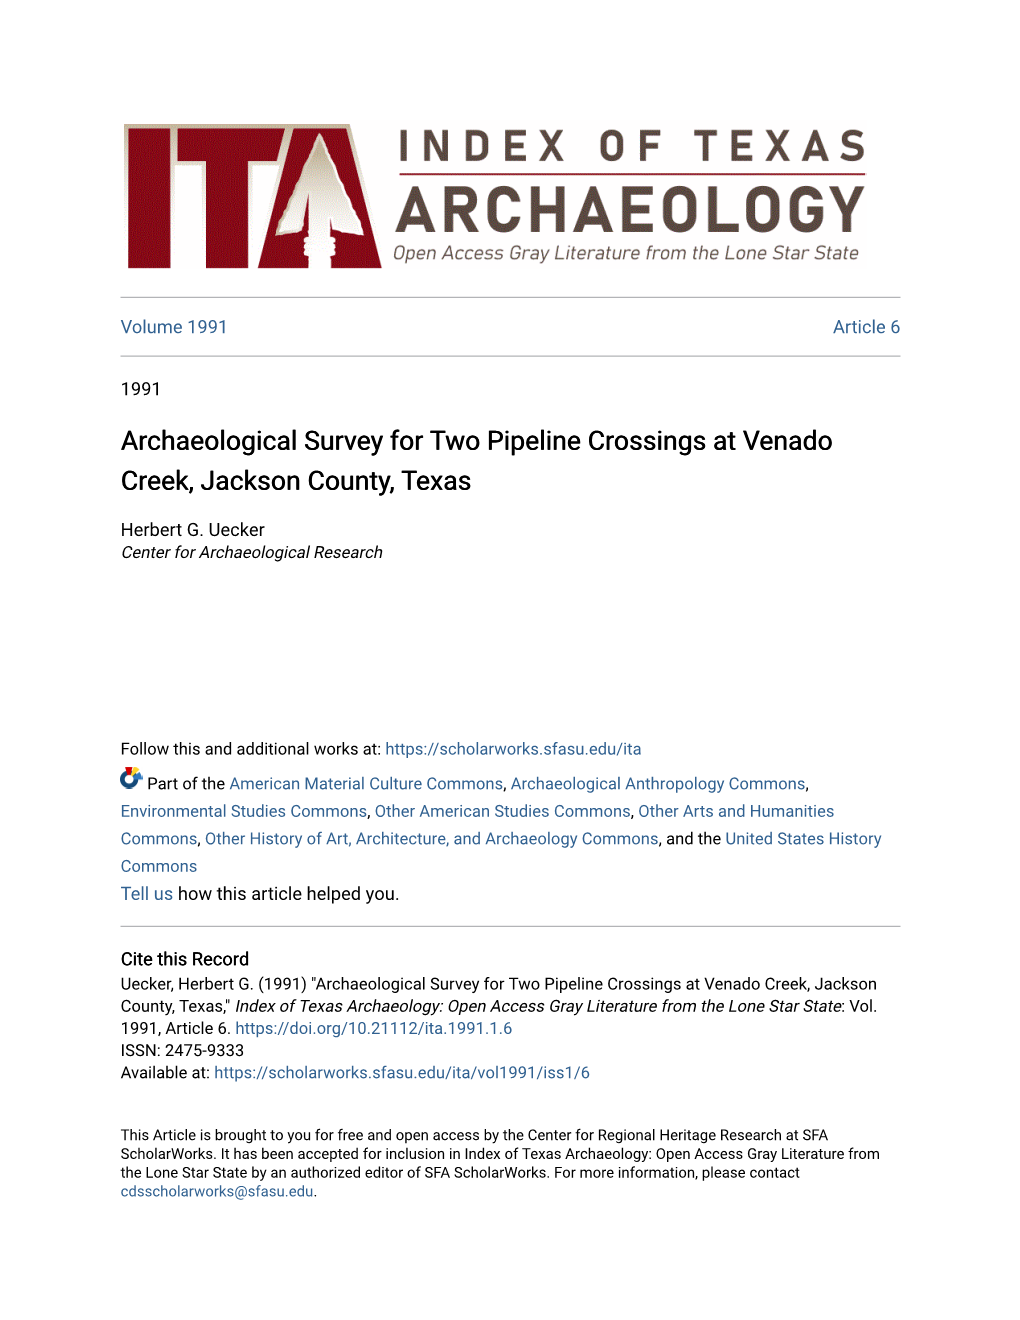 Archaeological Survey for Two Pipeline Crossings at Venado Creek, Jackson County, Texas